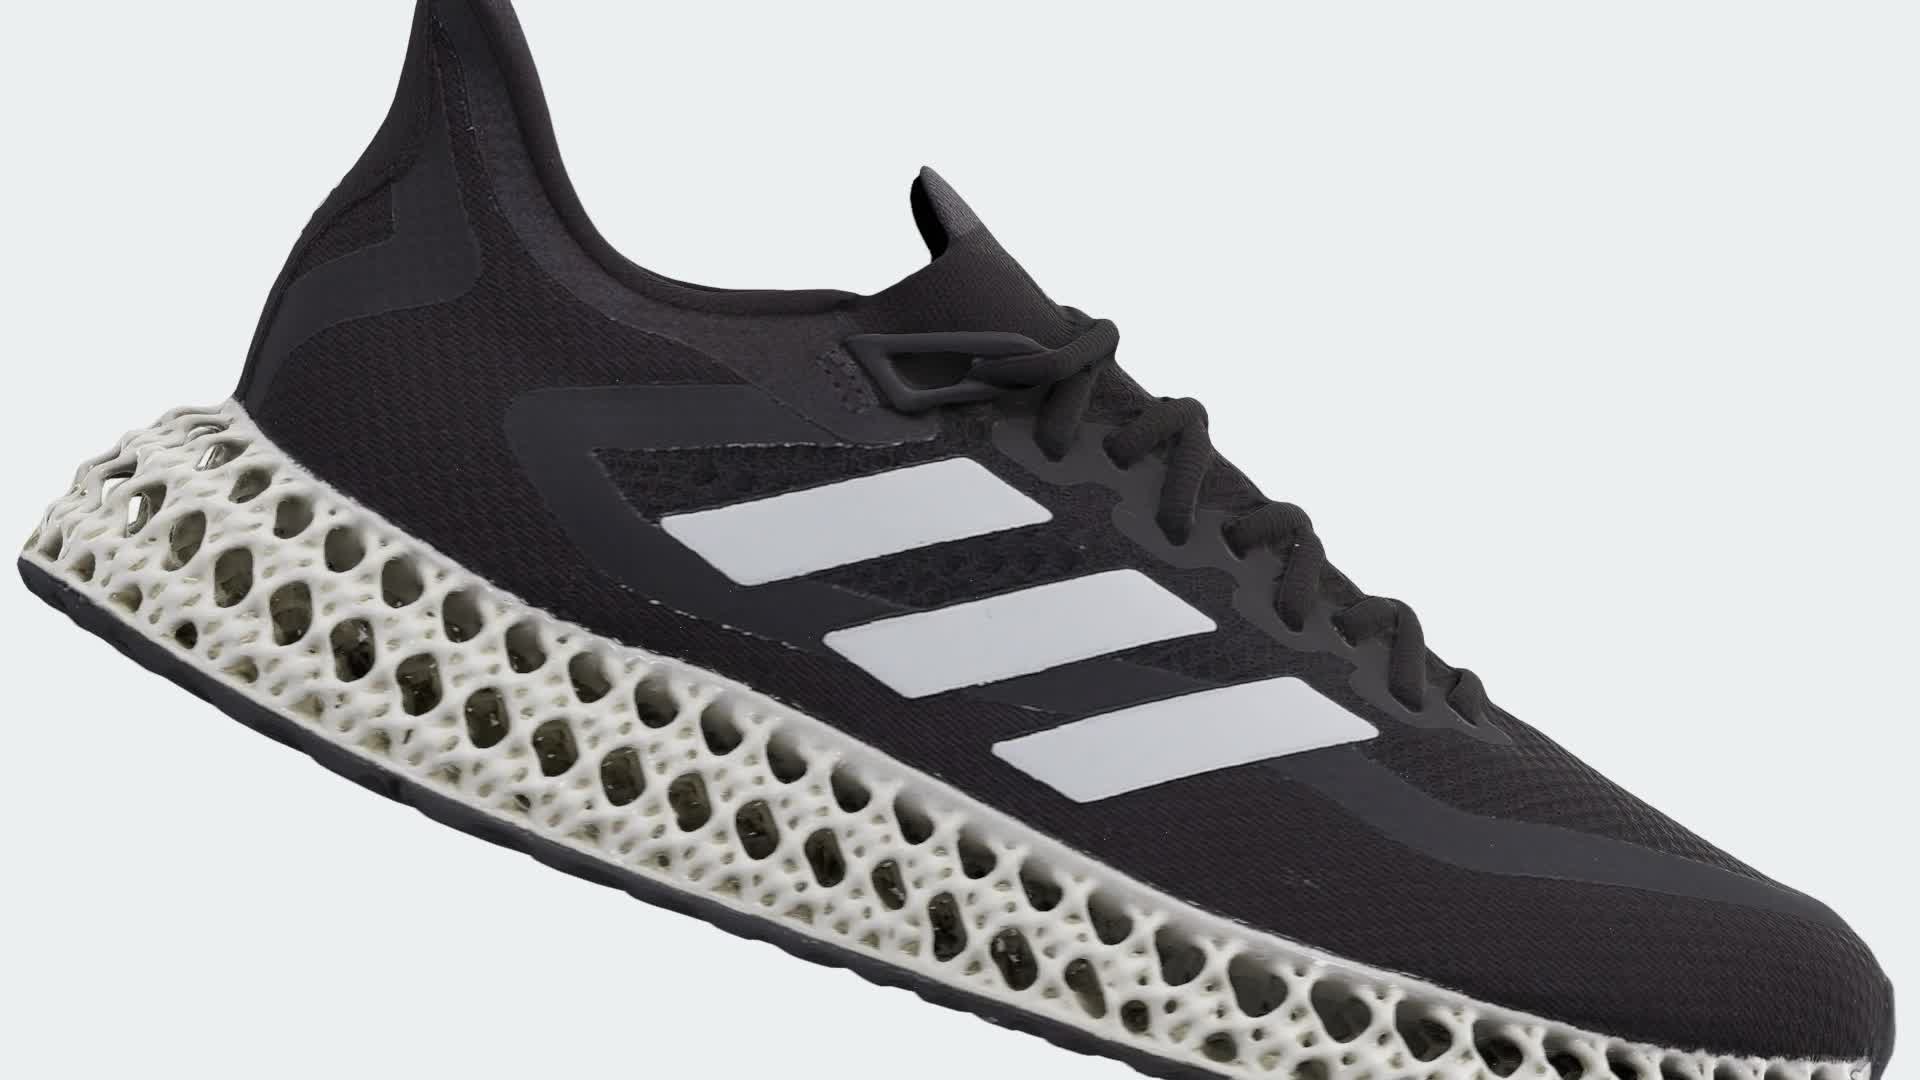 Adidas x Wales Bonner Samba Sneakers in black | RADPRESENT